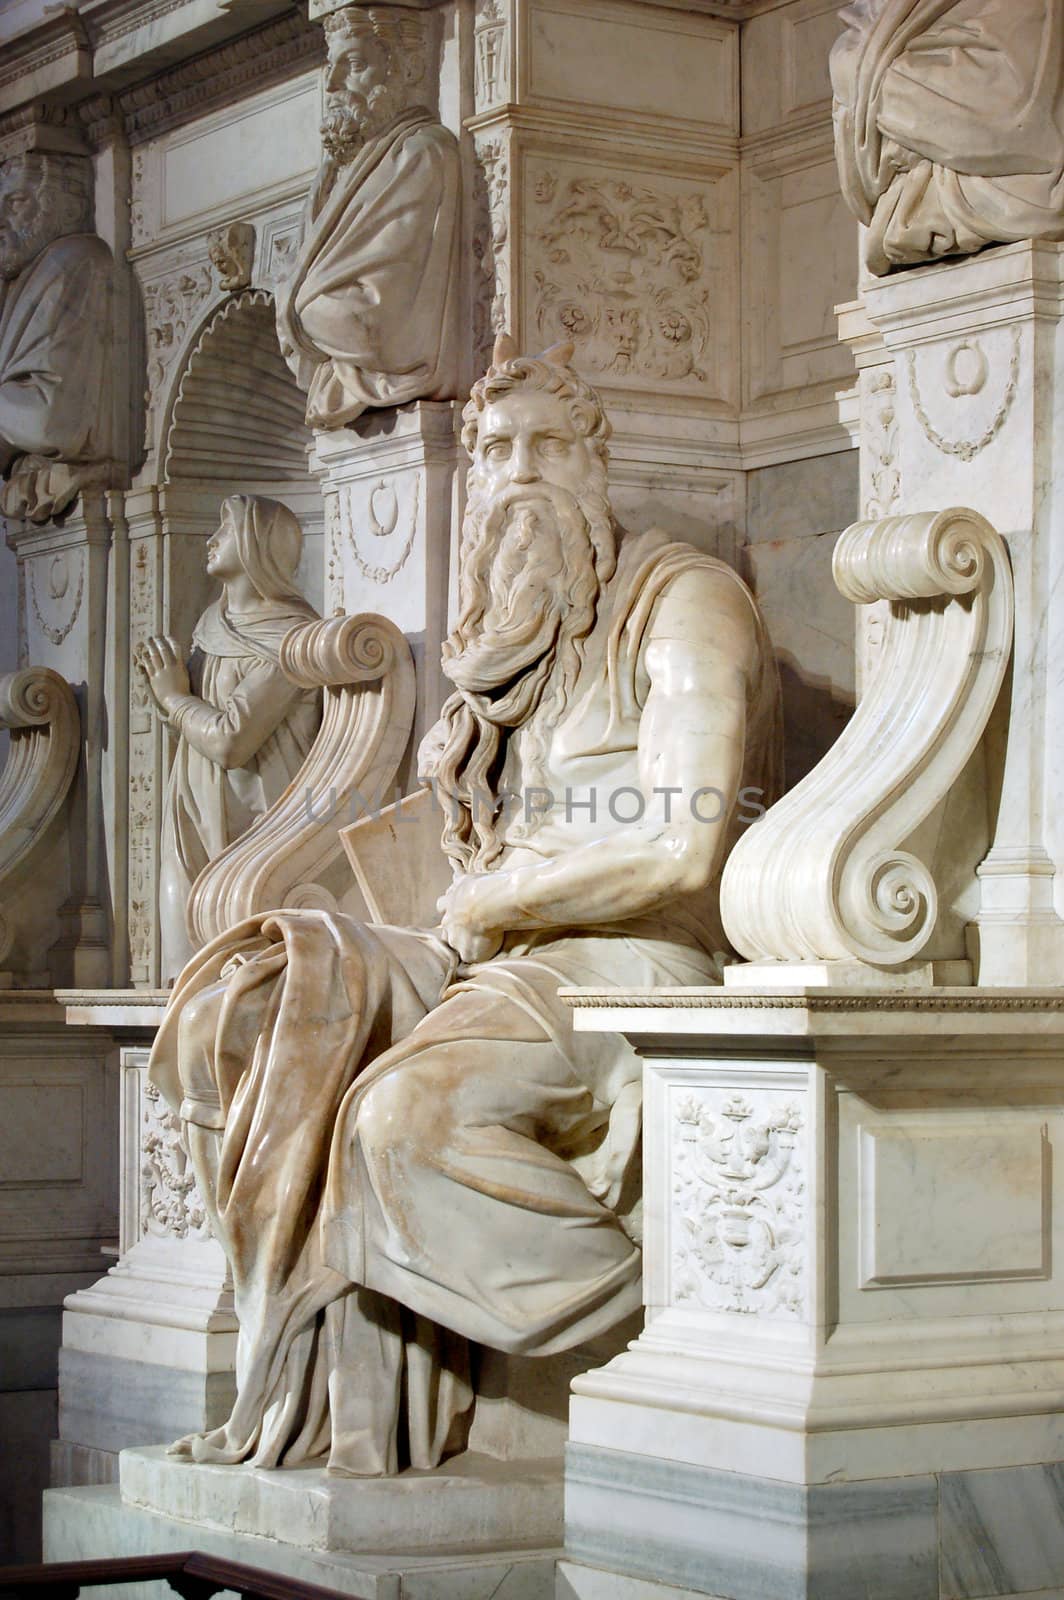 San Pietro in Vincoli - Michelangelo's Moses - Rome, Italy